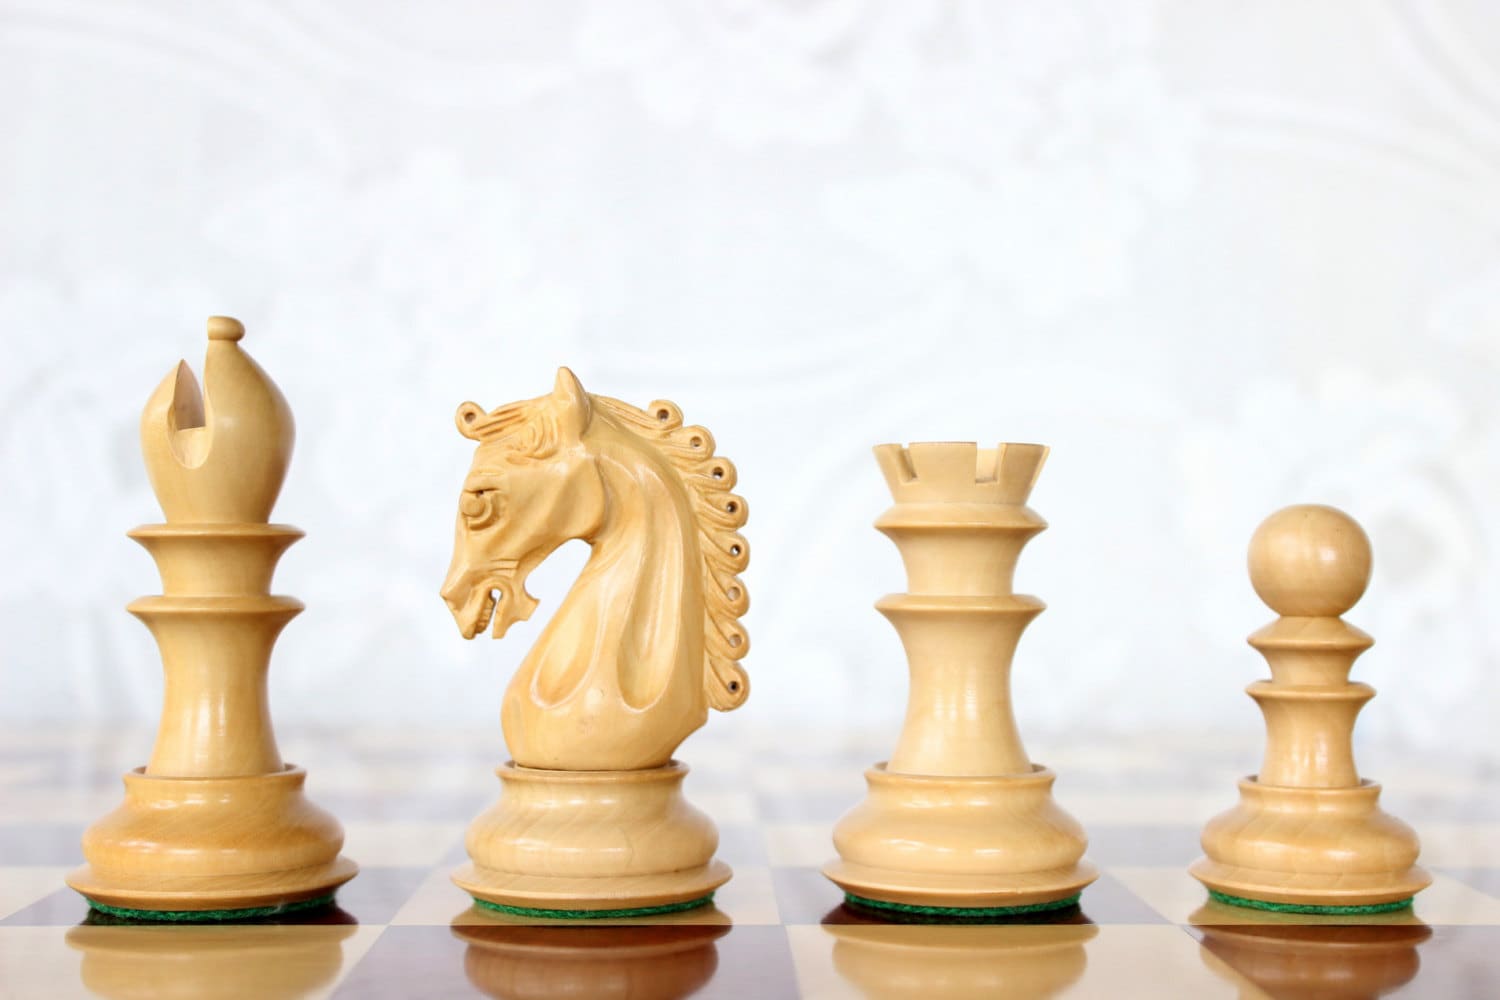 CLEARANCE SALE Ruy Lopez De Segura Luxury Chess Pieces in 